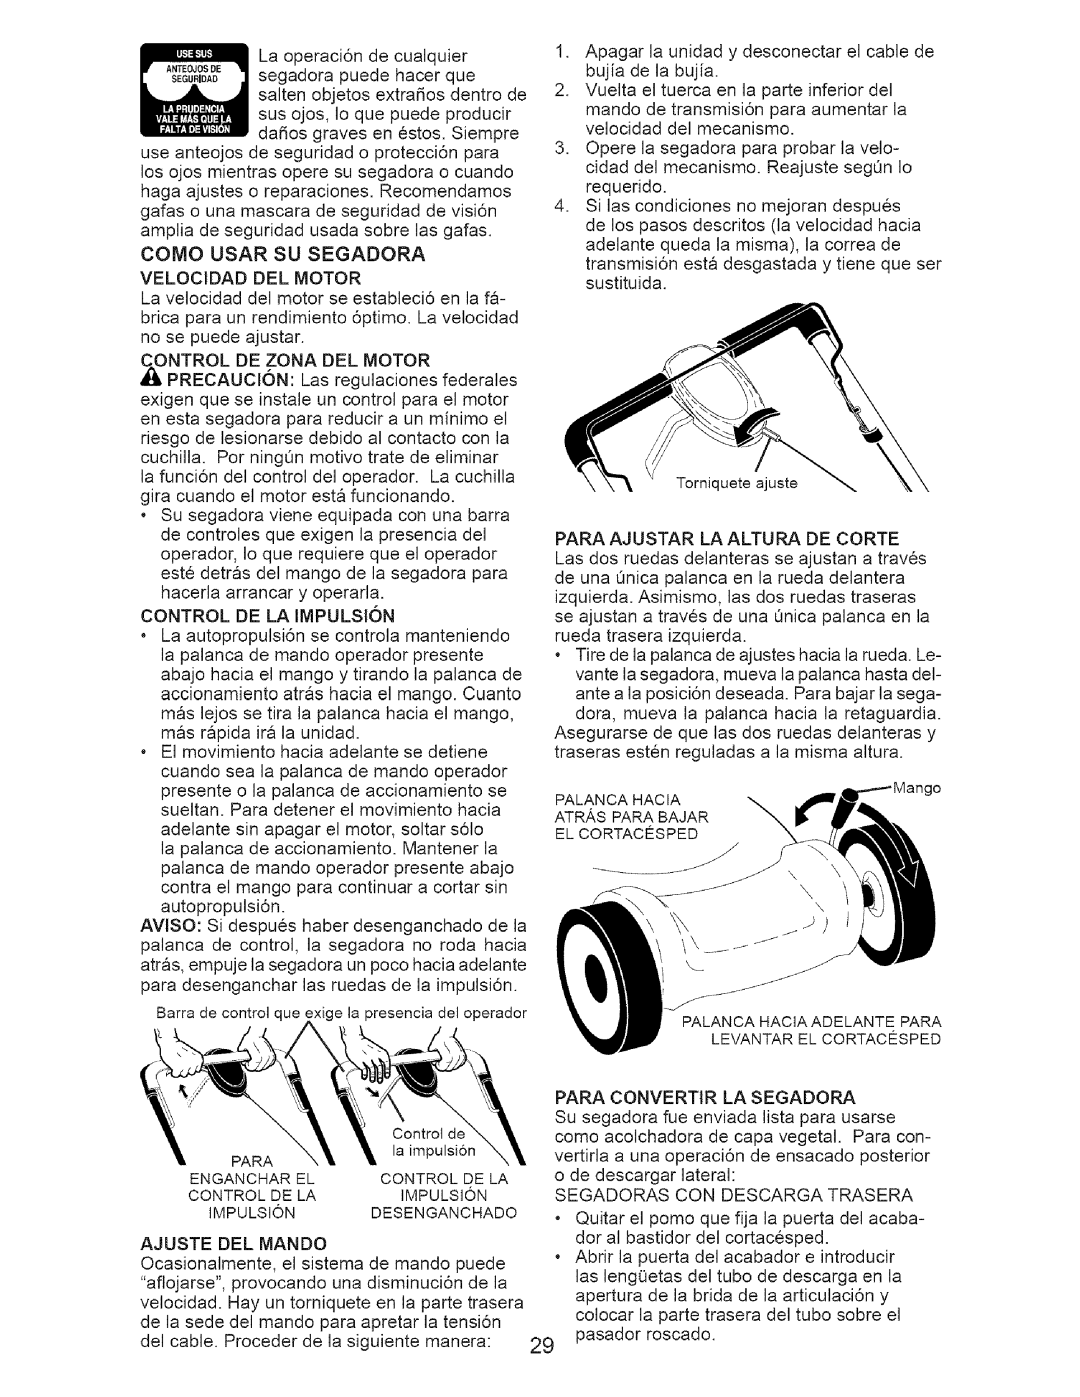 Craftsman 917.37712 manual Como Usar Su Segadora, jjj_ 